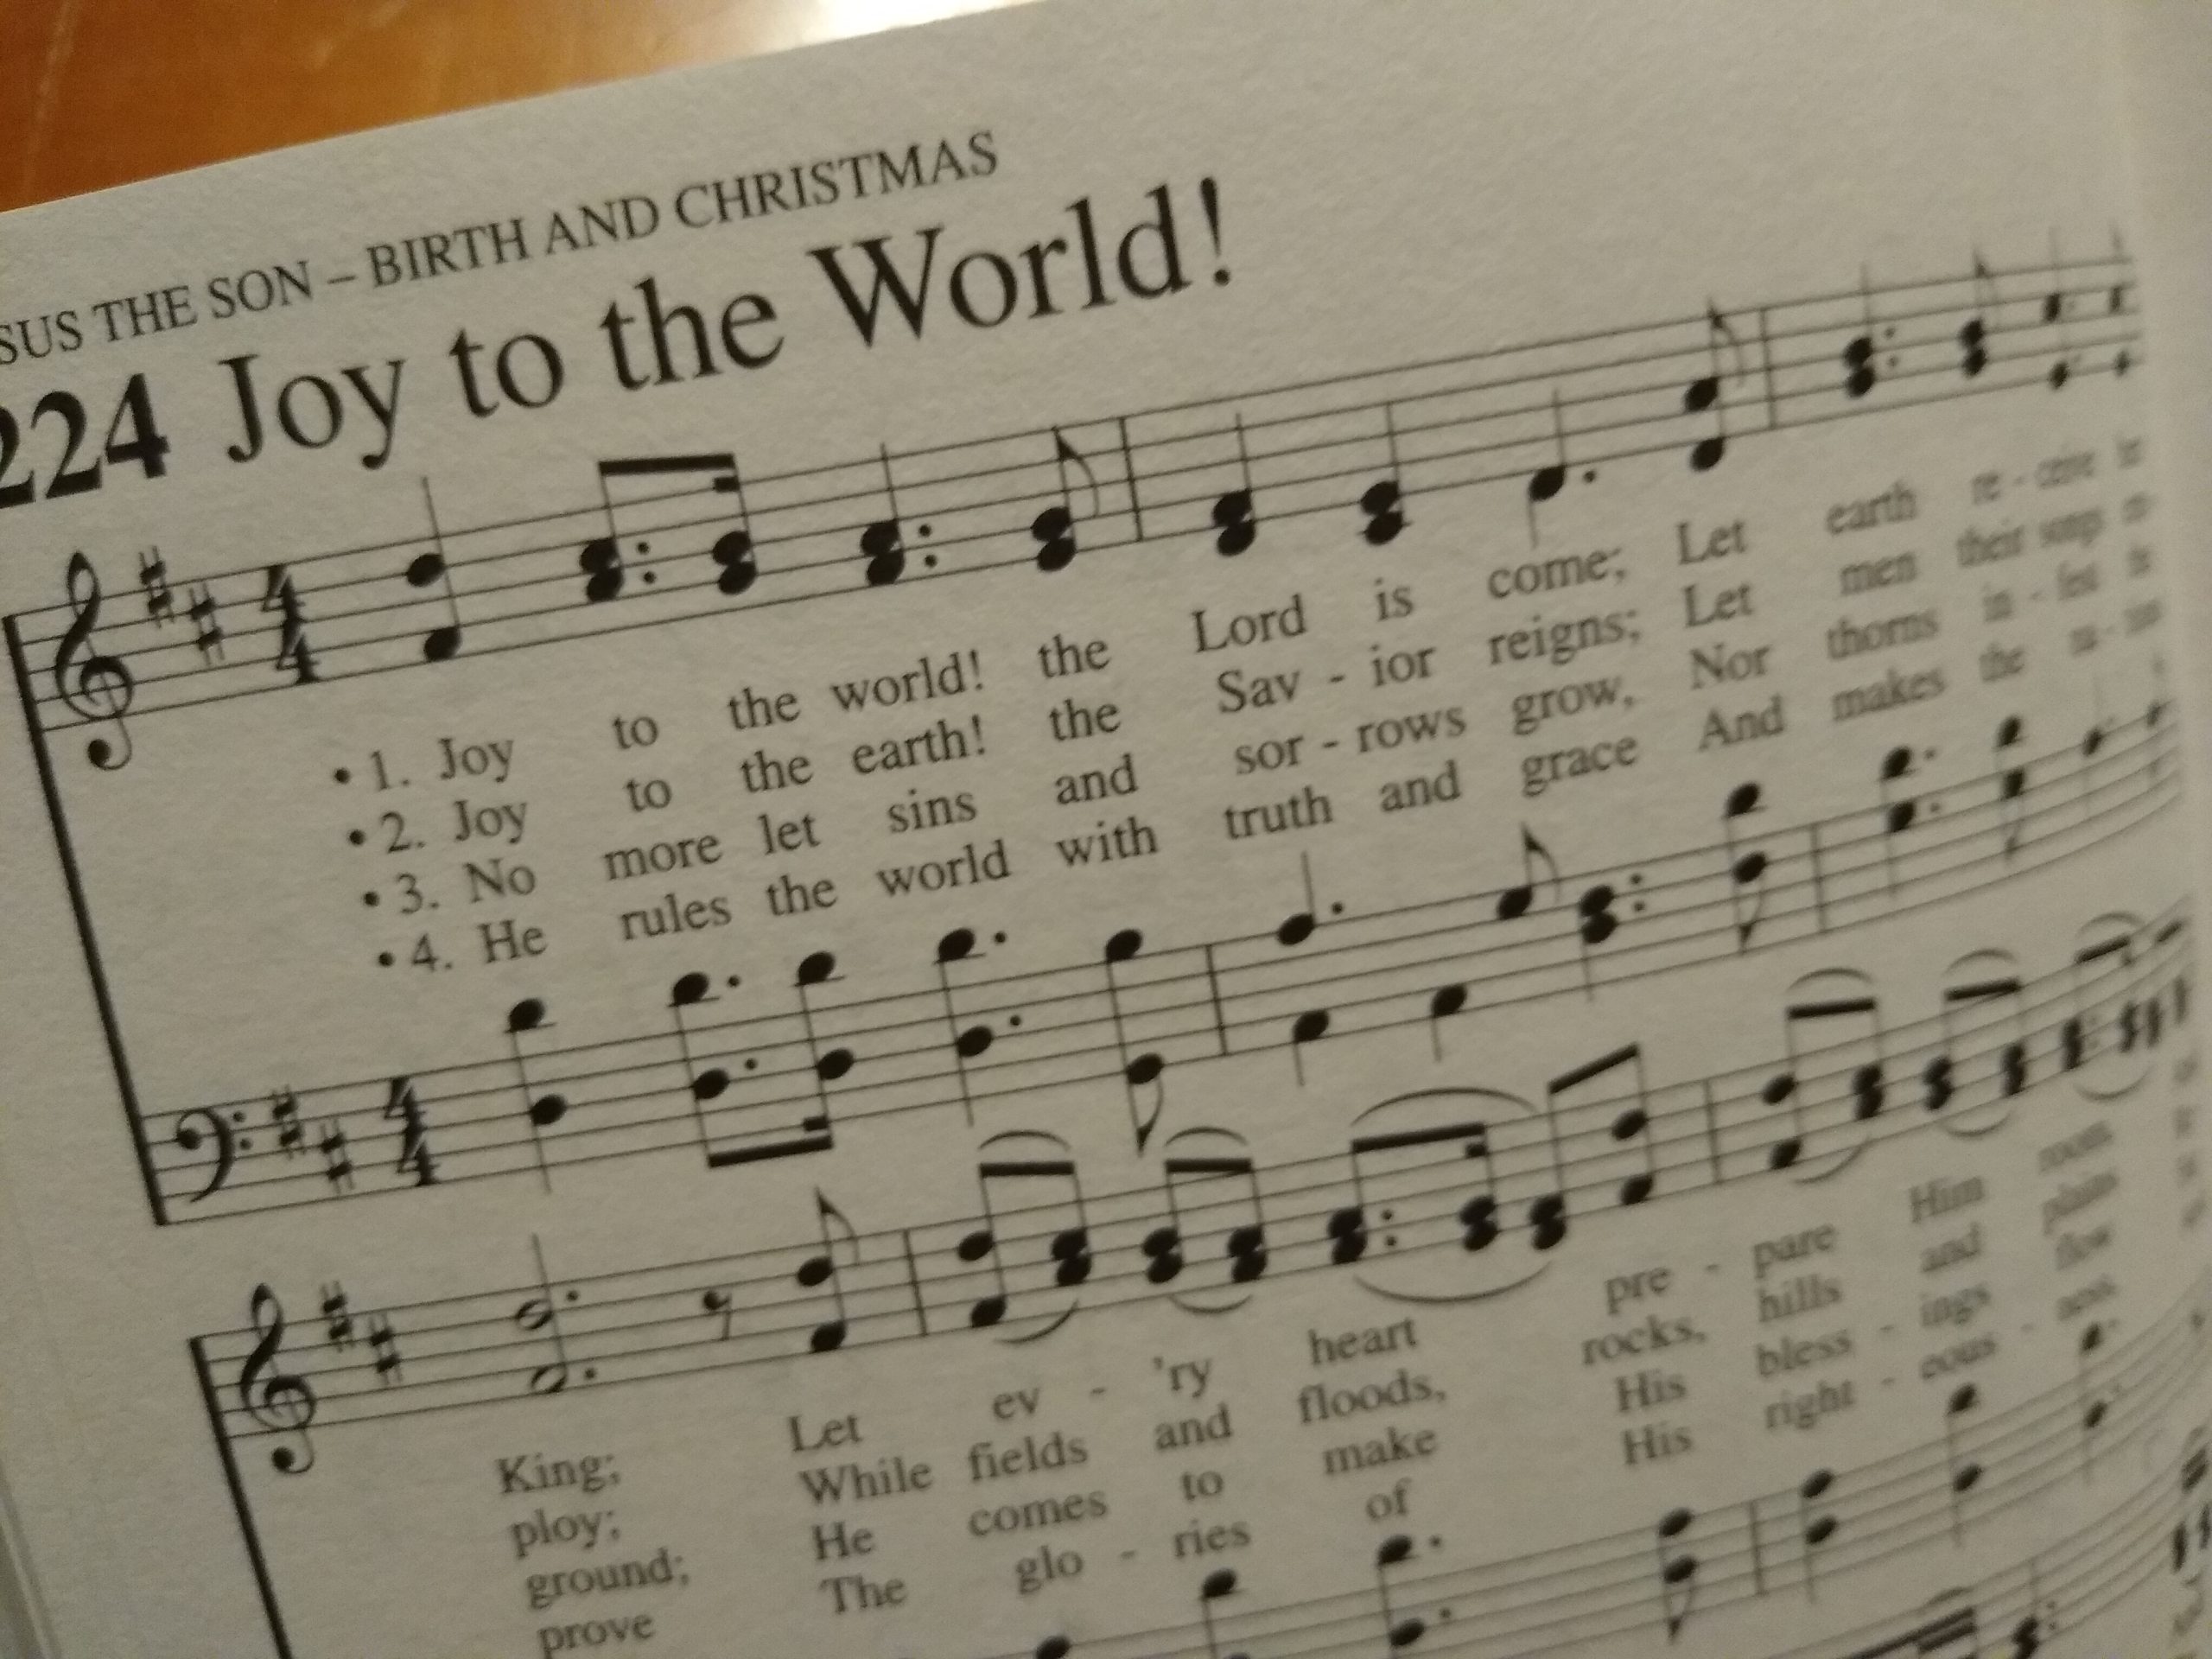 Christmas Carol: Joy to the World